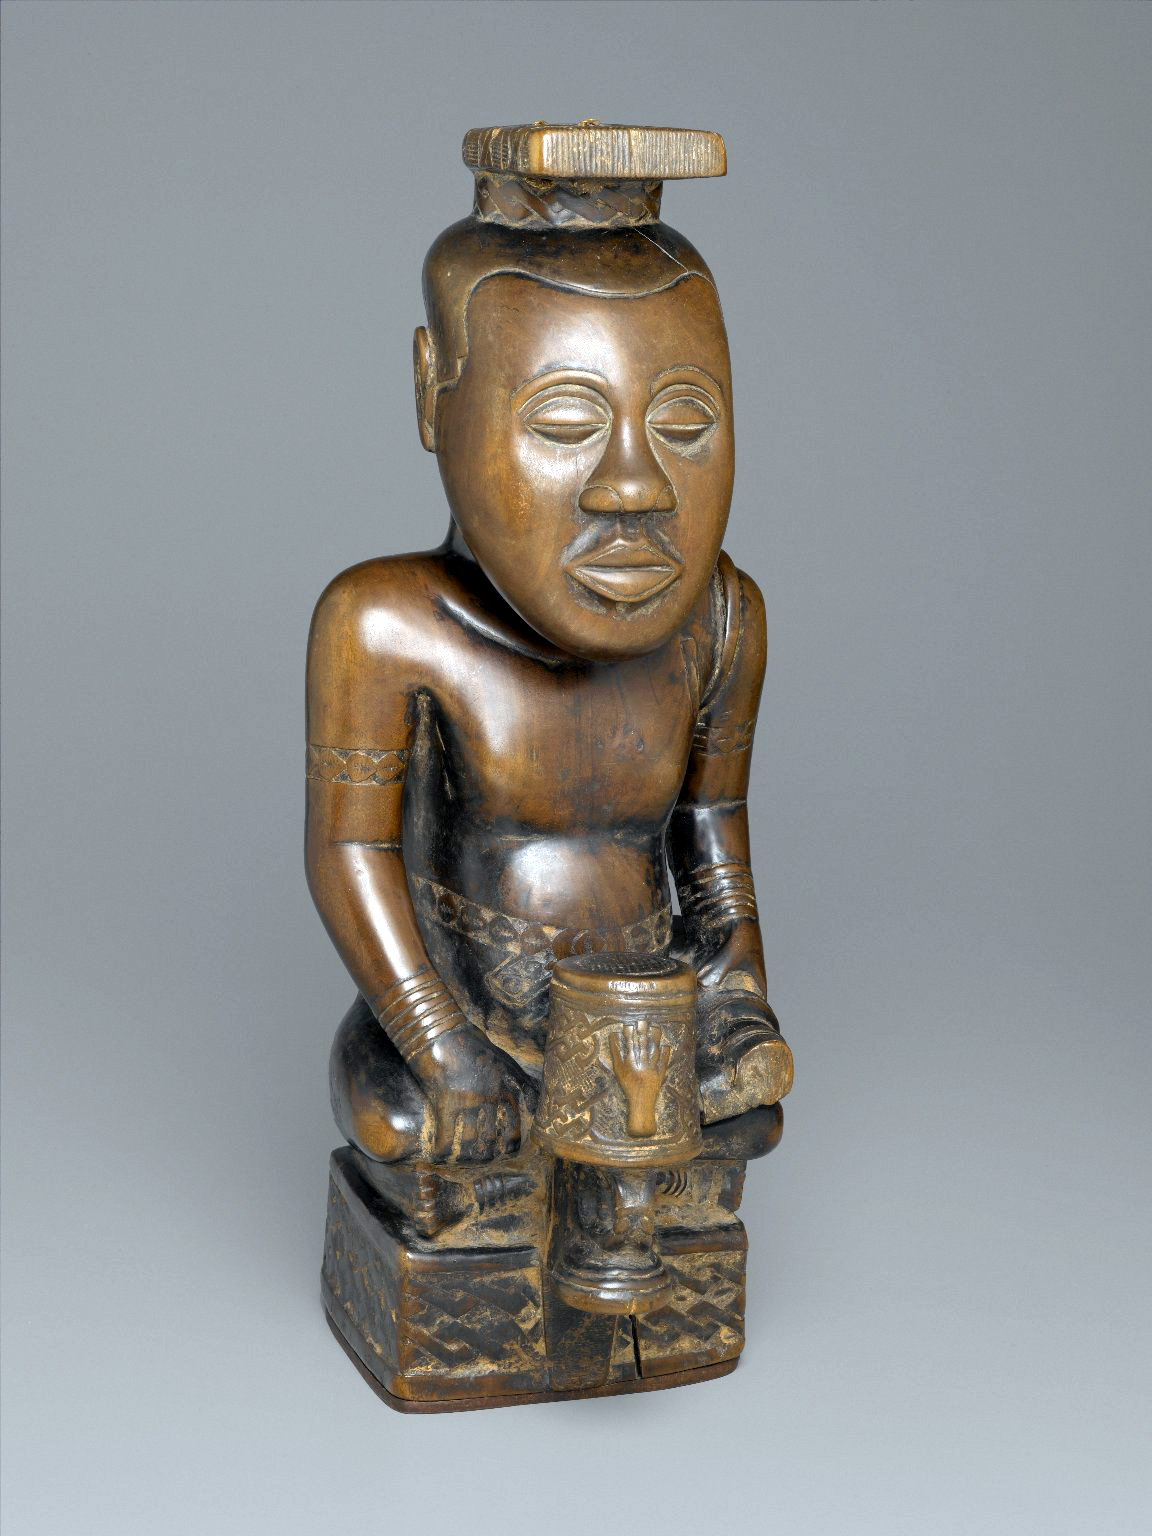 Ndop Portrait of King Mishe miShyaang maMbul, c. 1760-80, wood and camwood powder, 19-1/2 x 7-5/8 x 8-5/8" (Brooklyn Museum)